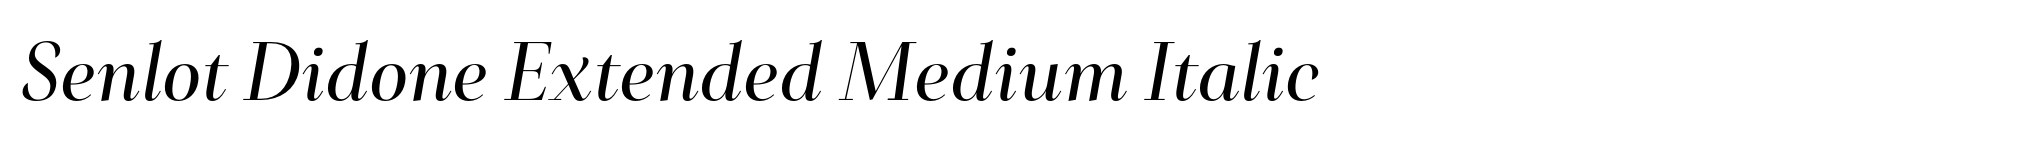 Senlot Didone Extended Medium Italic image